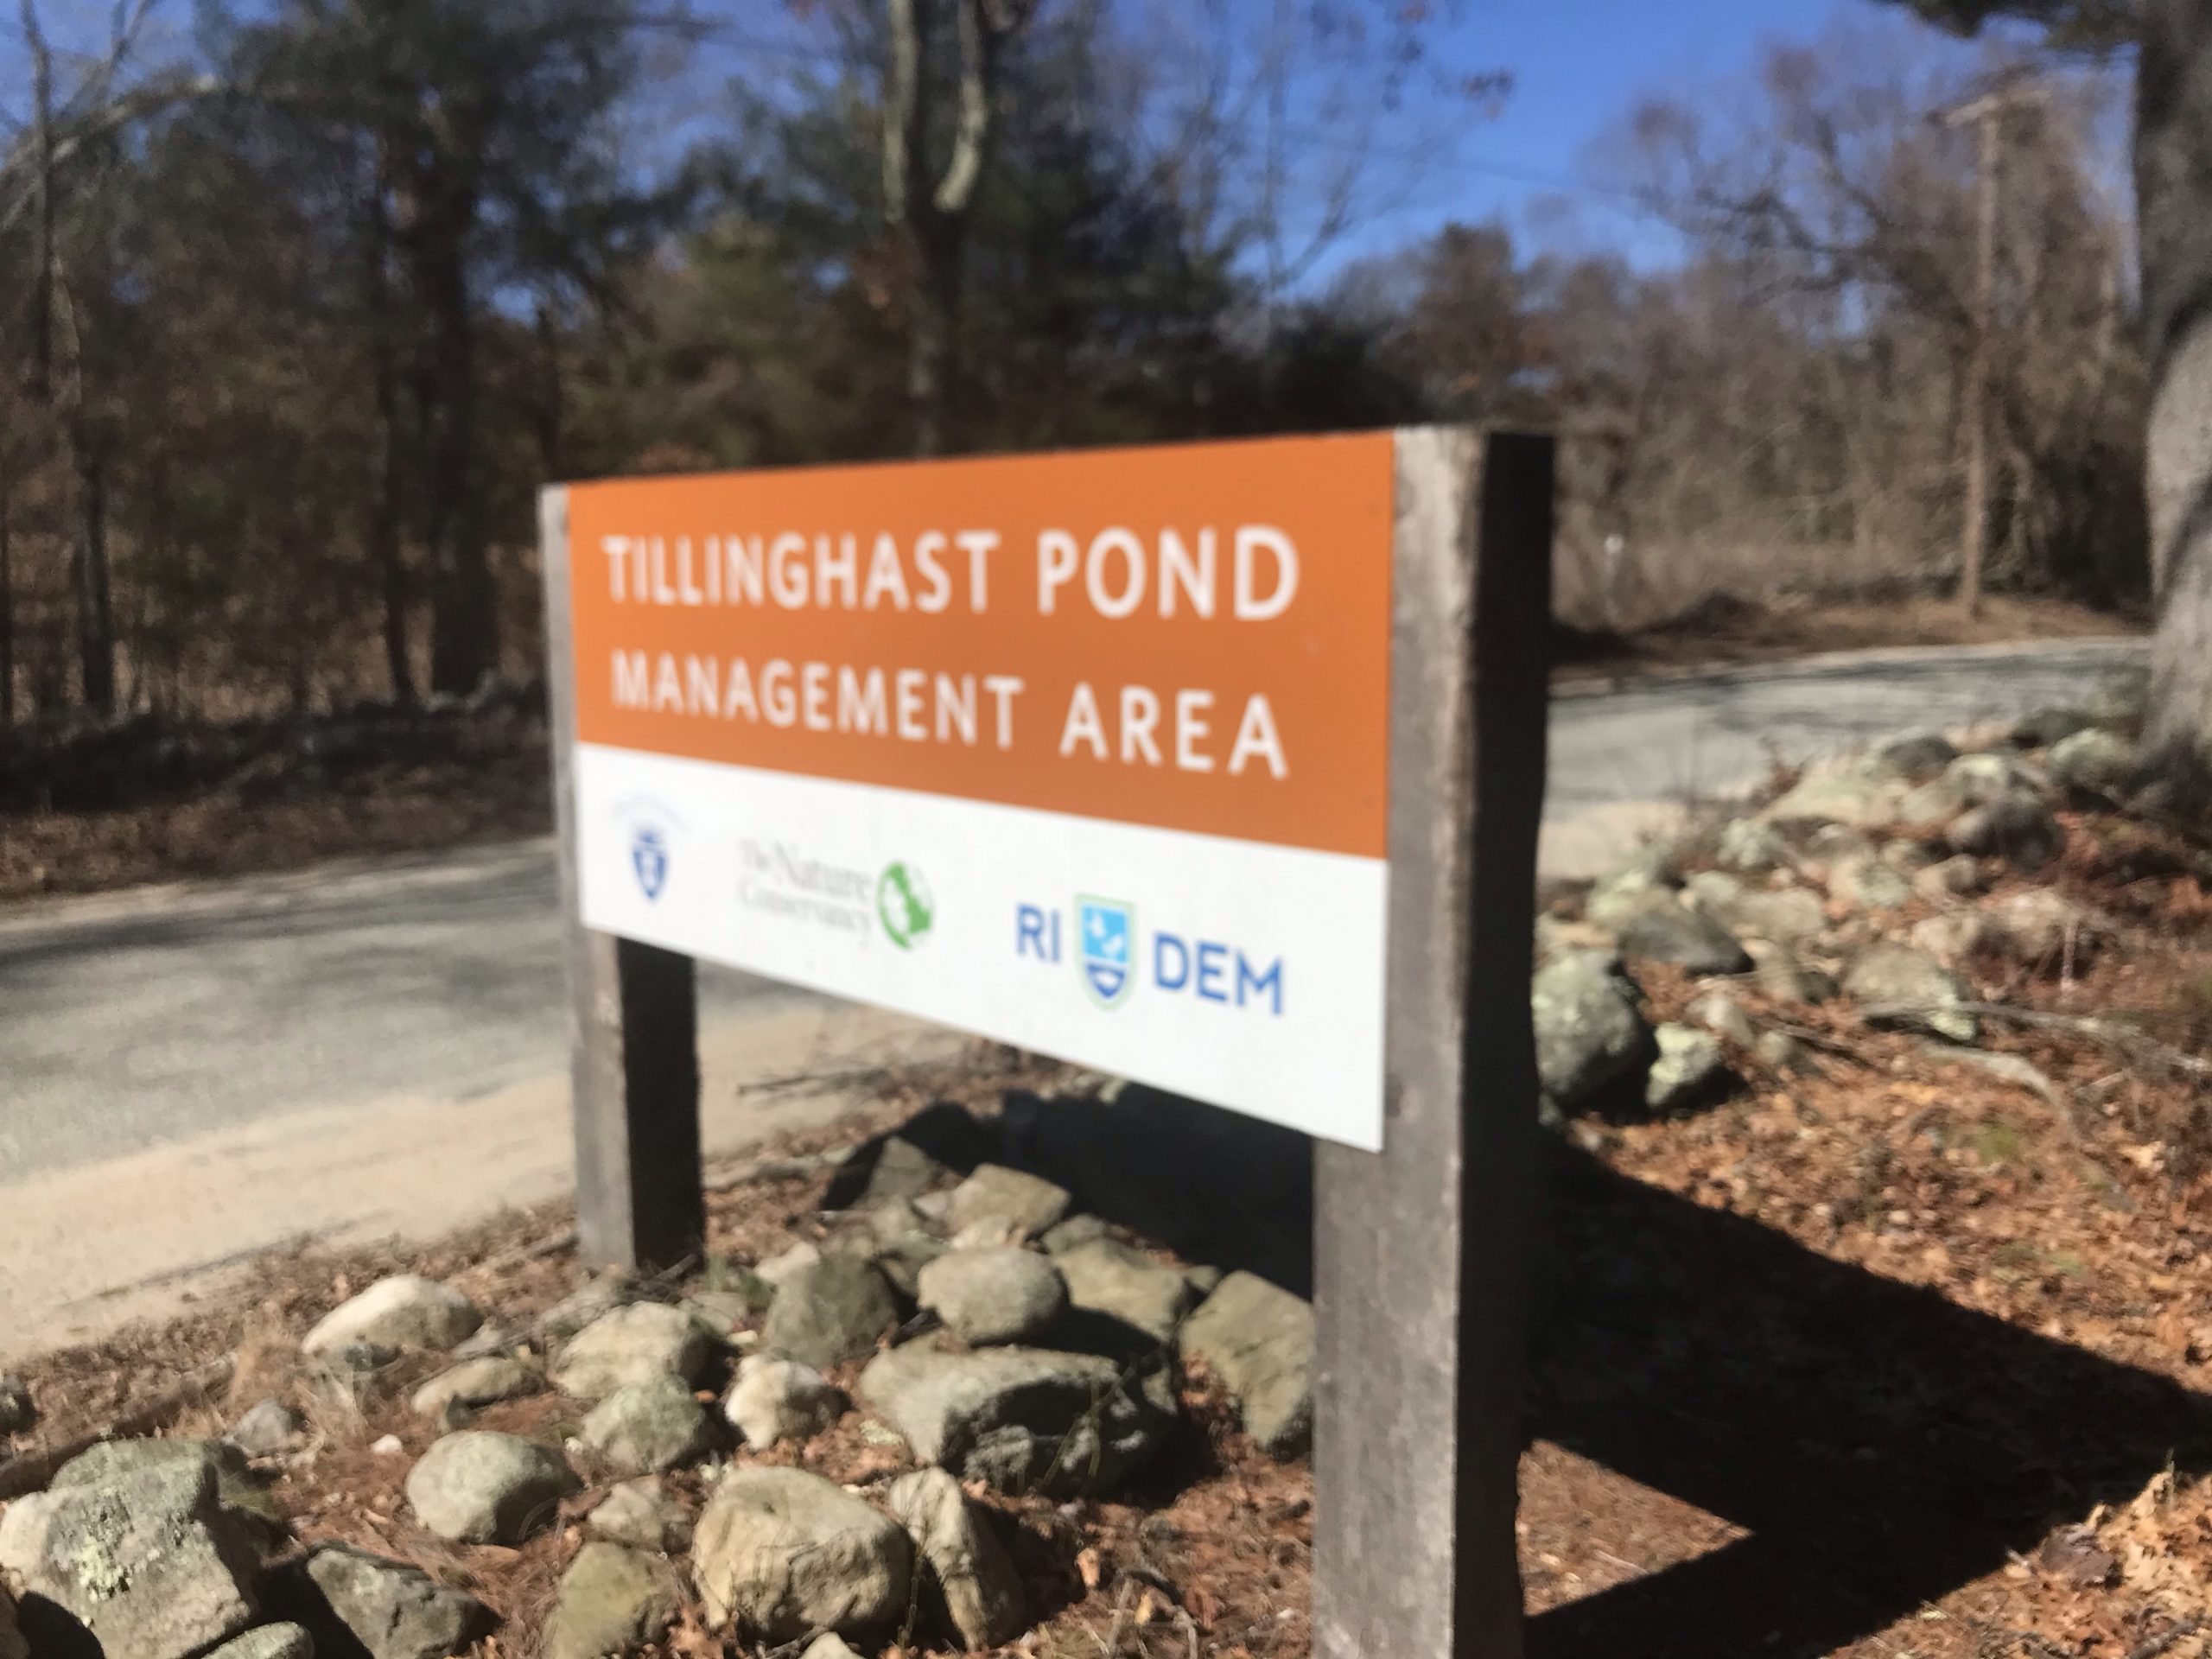 Tillinghast Pond Management Area in West Greenwich, Rhode Island with kids